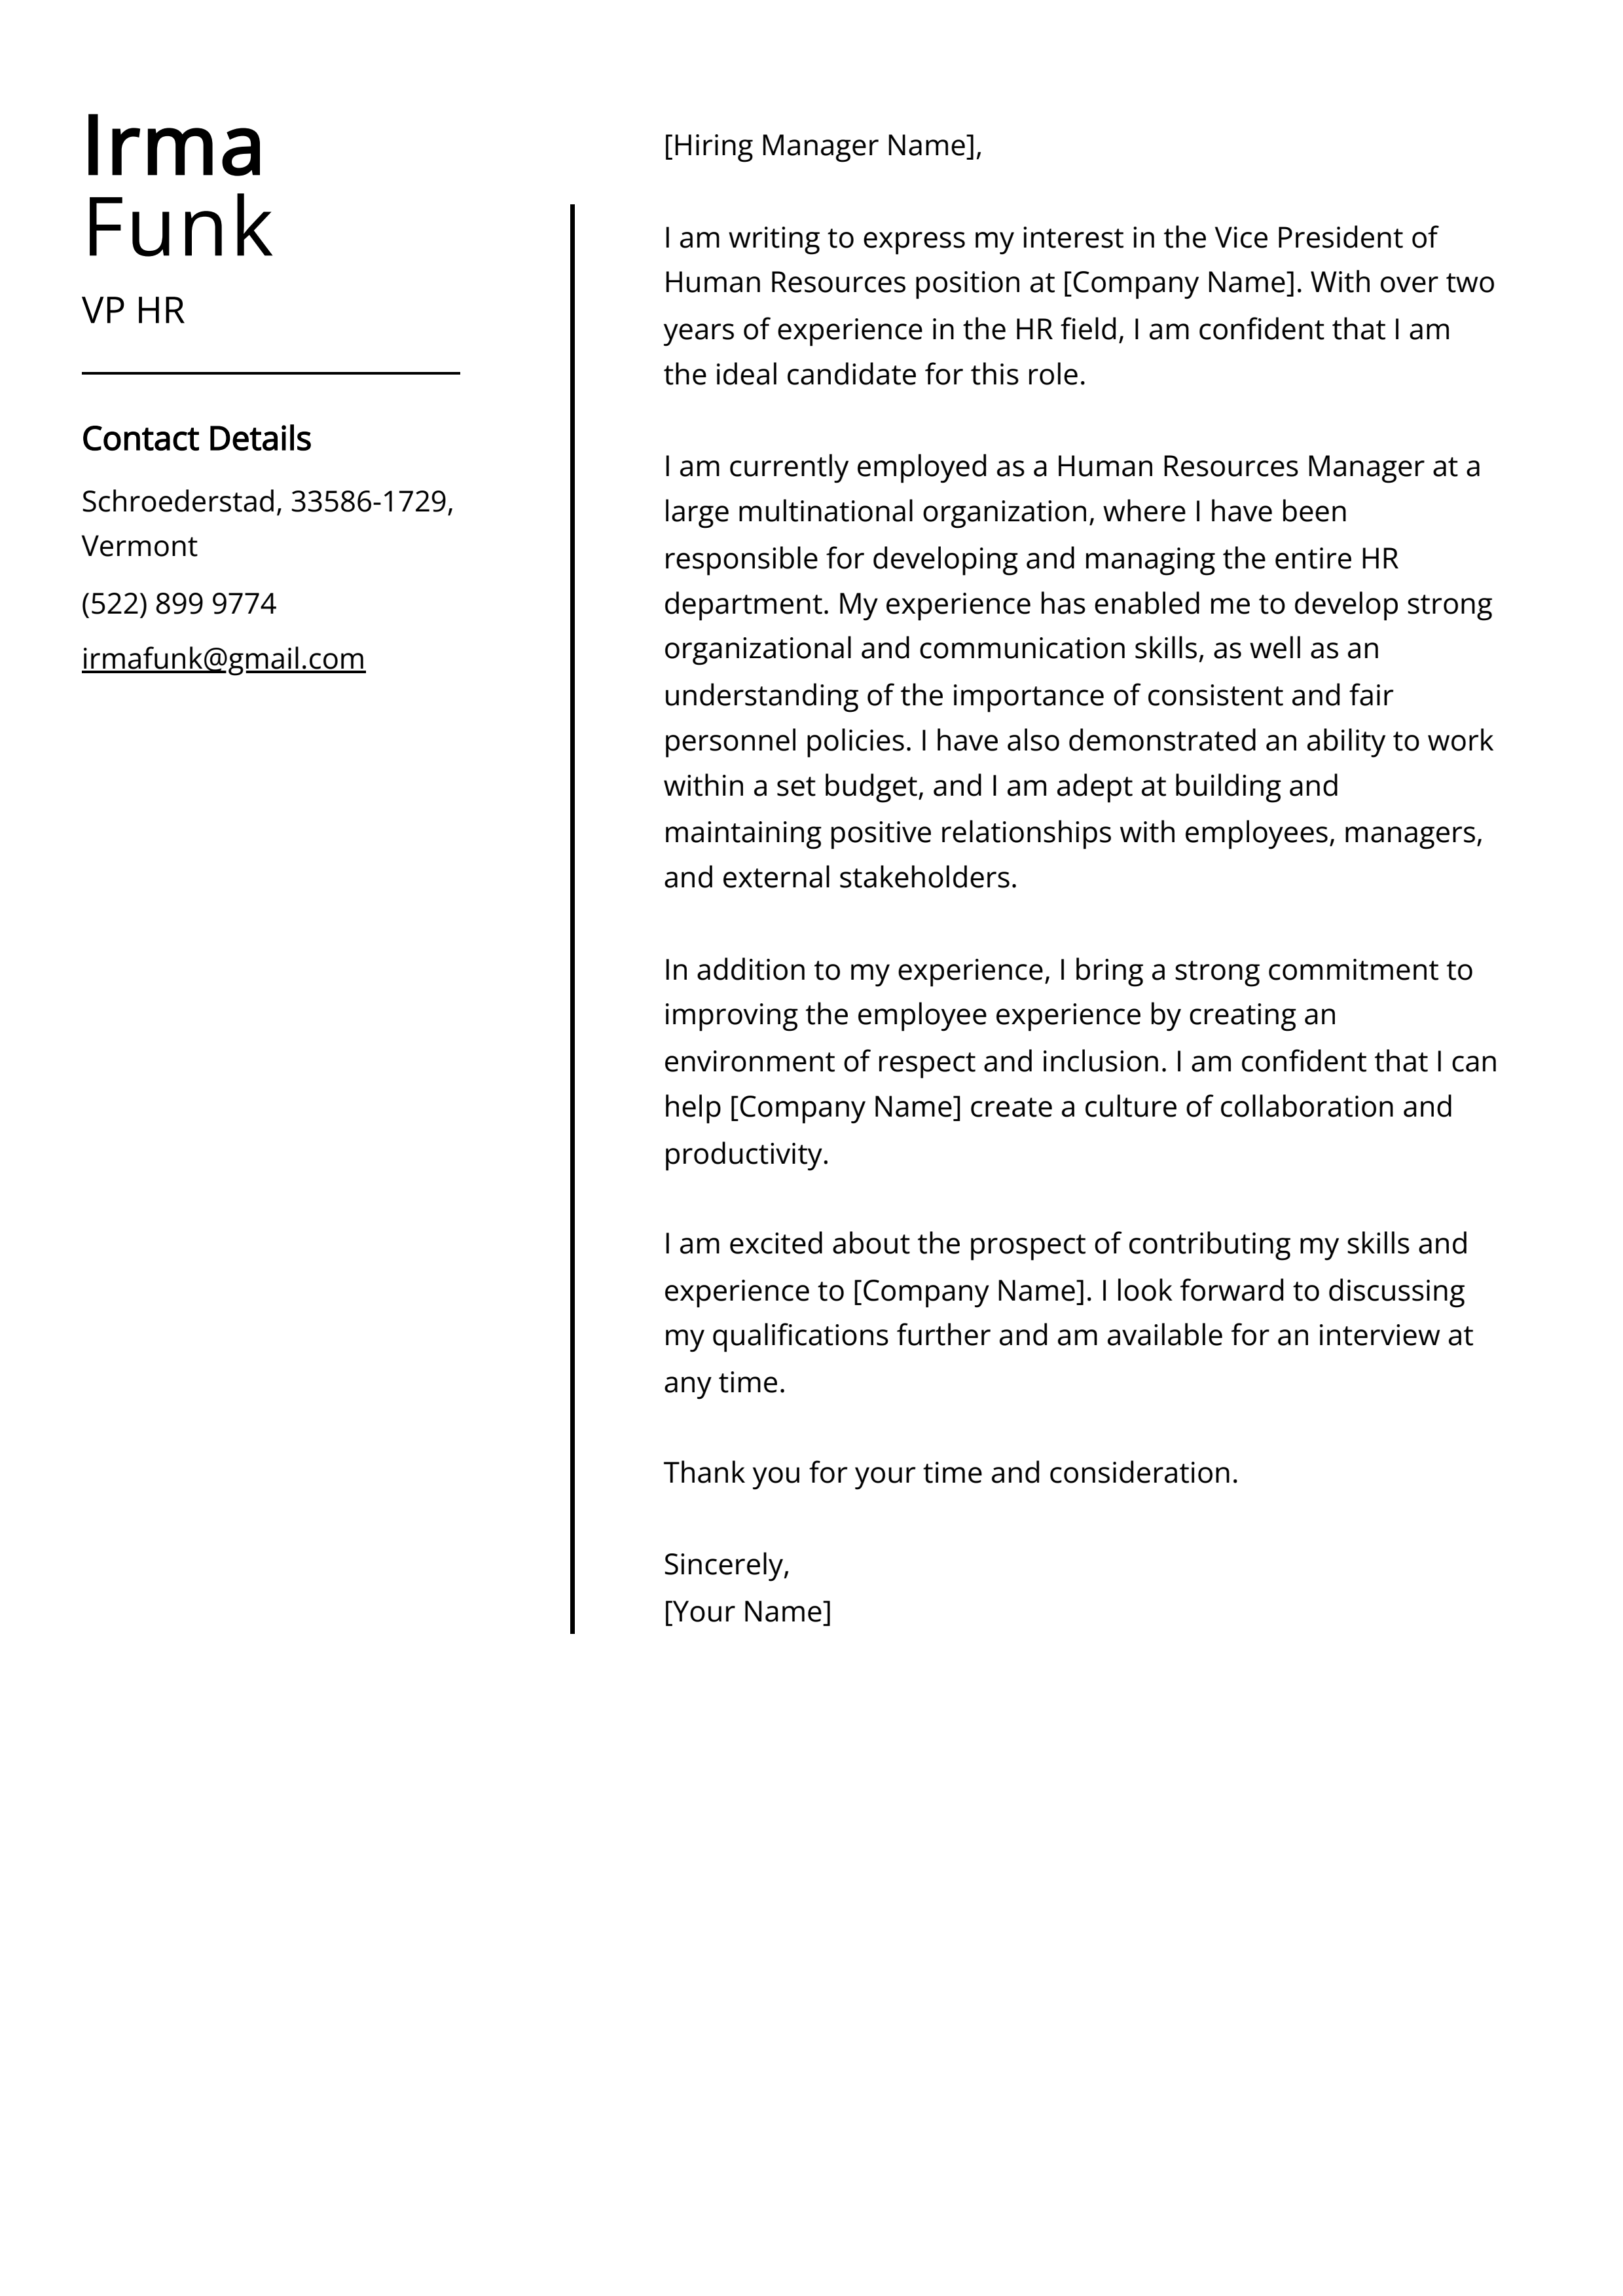 VP HR Cover Letter Example